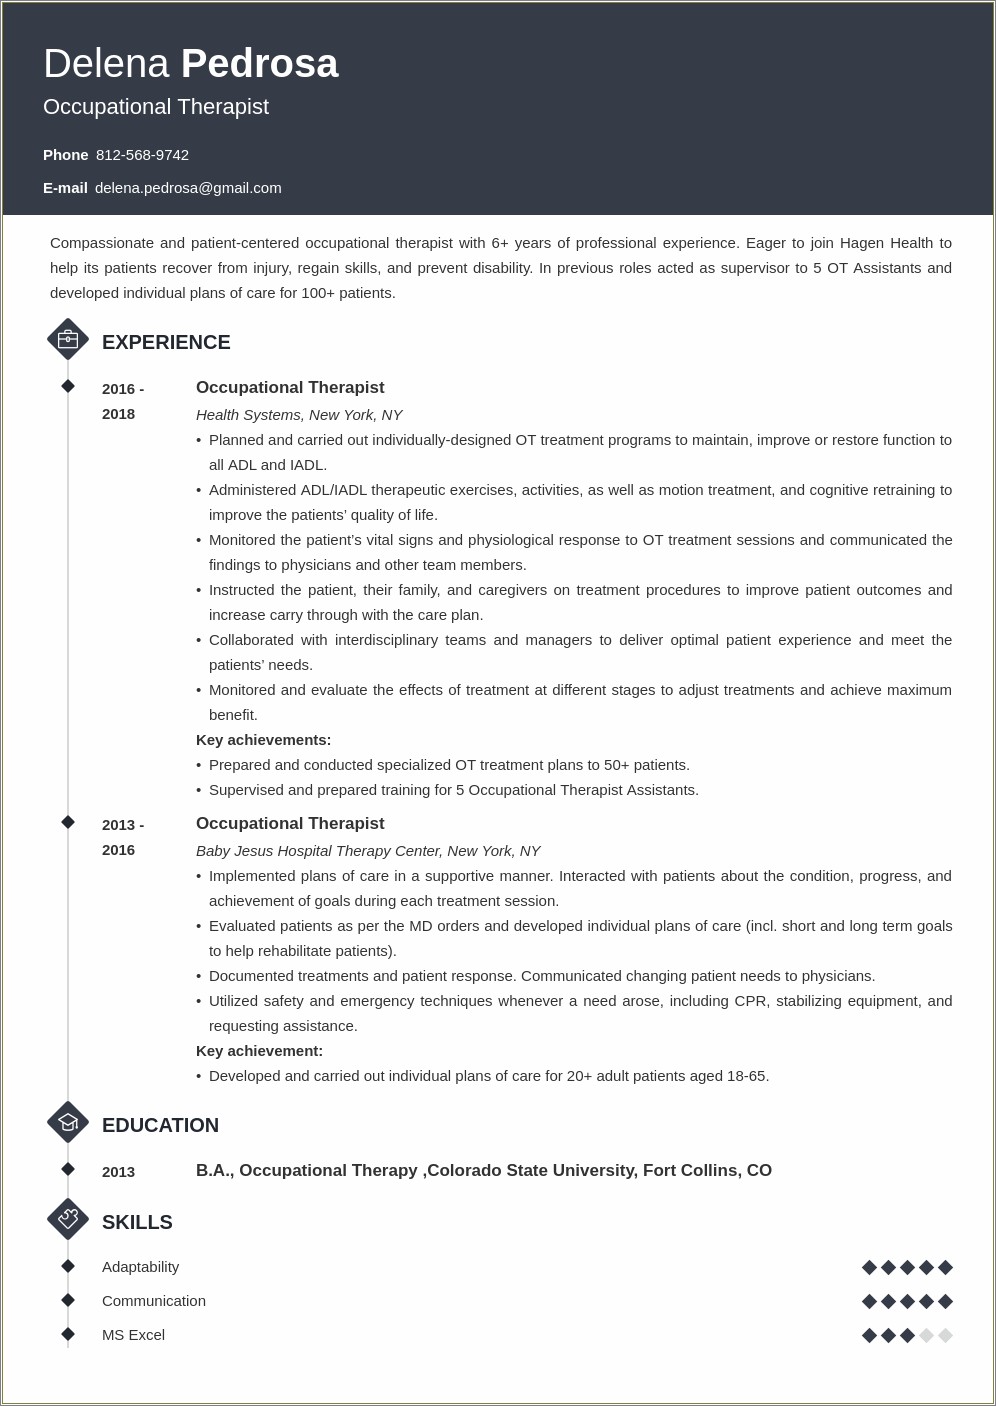 Occupational Therapist Job Description For Resume